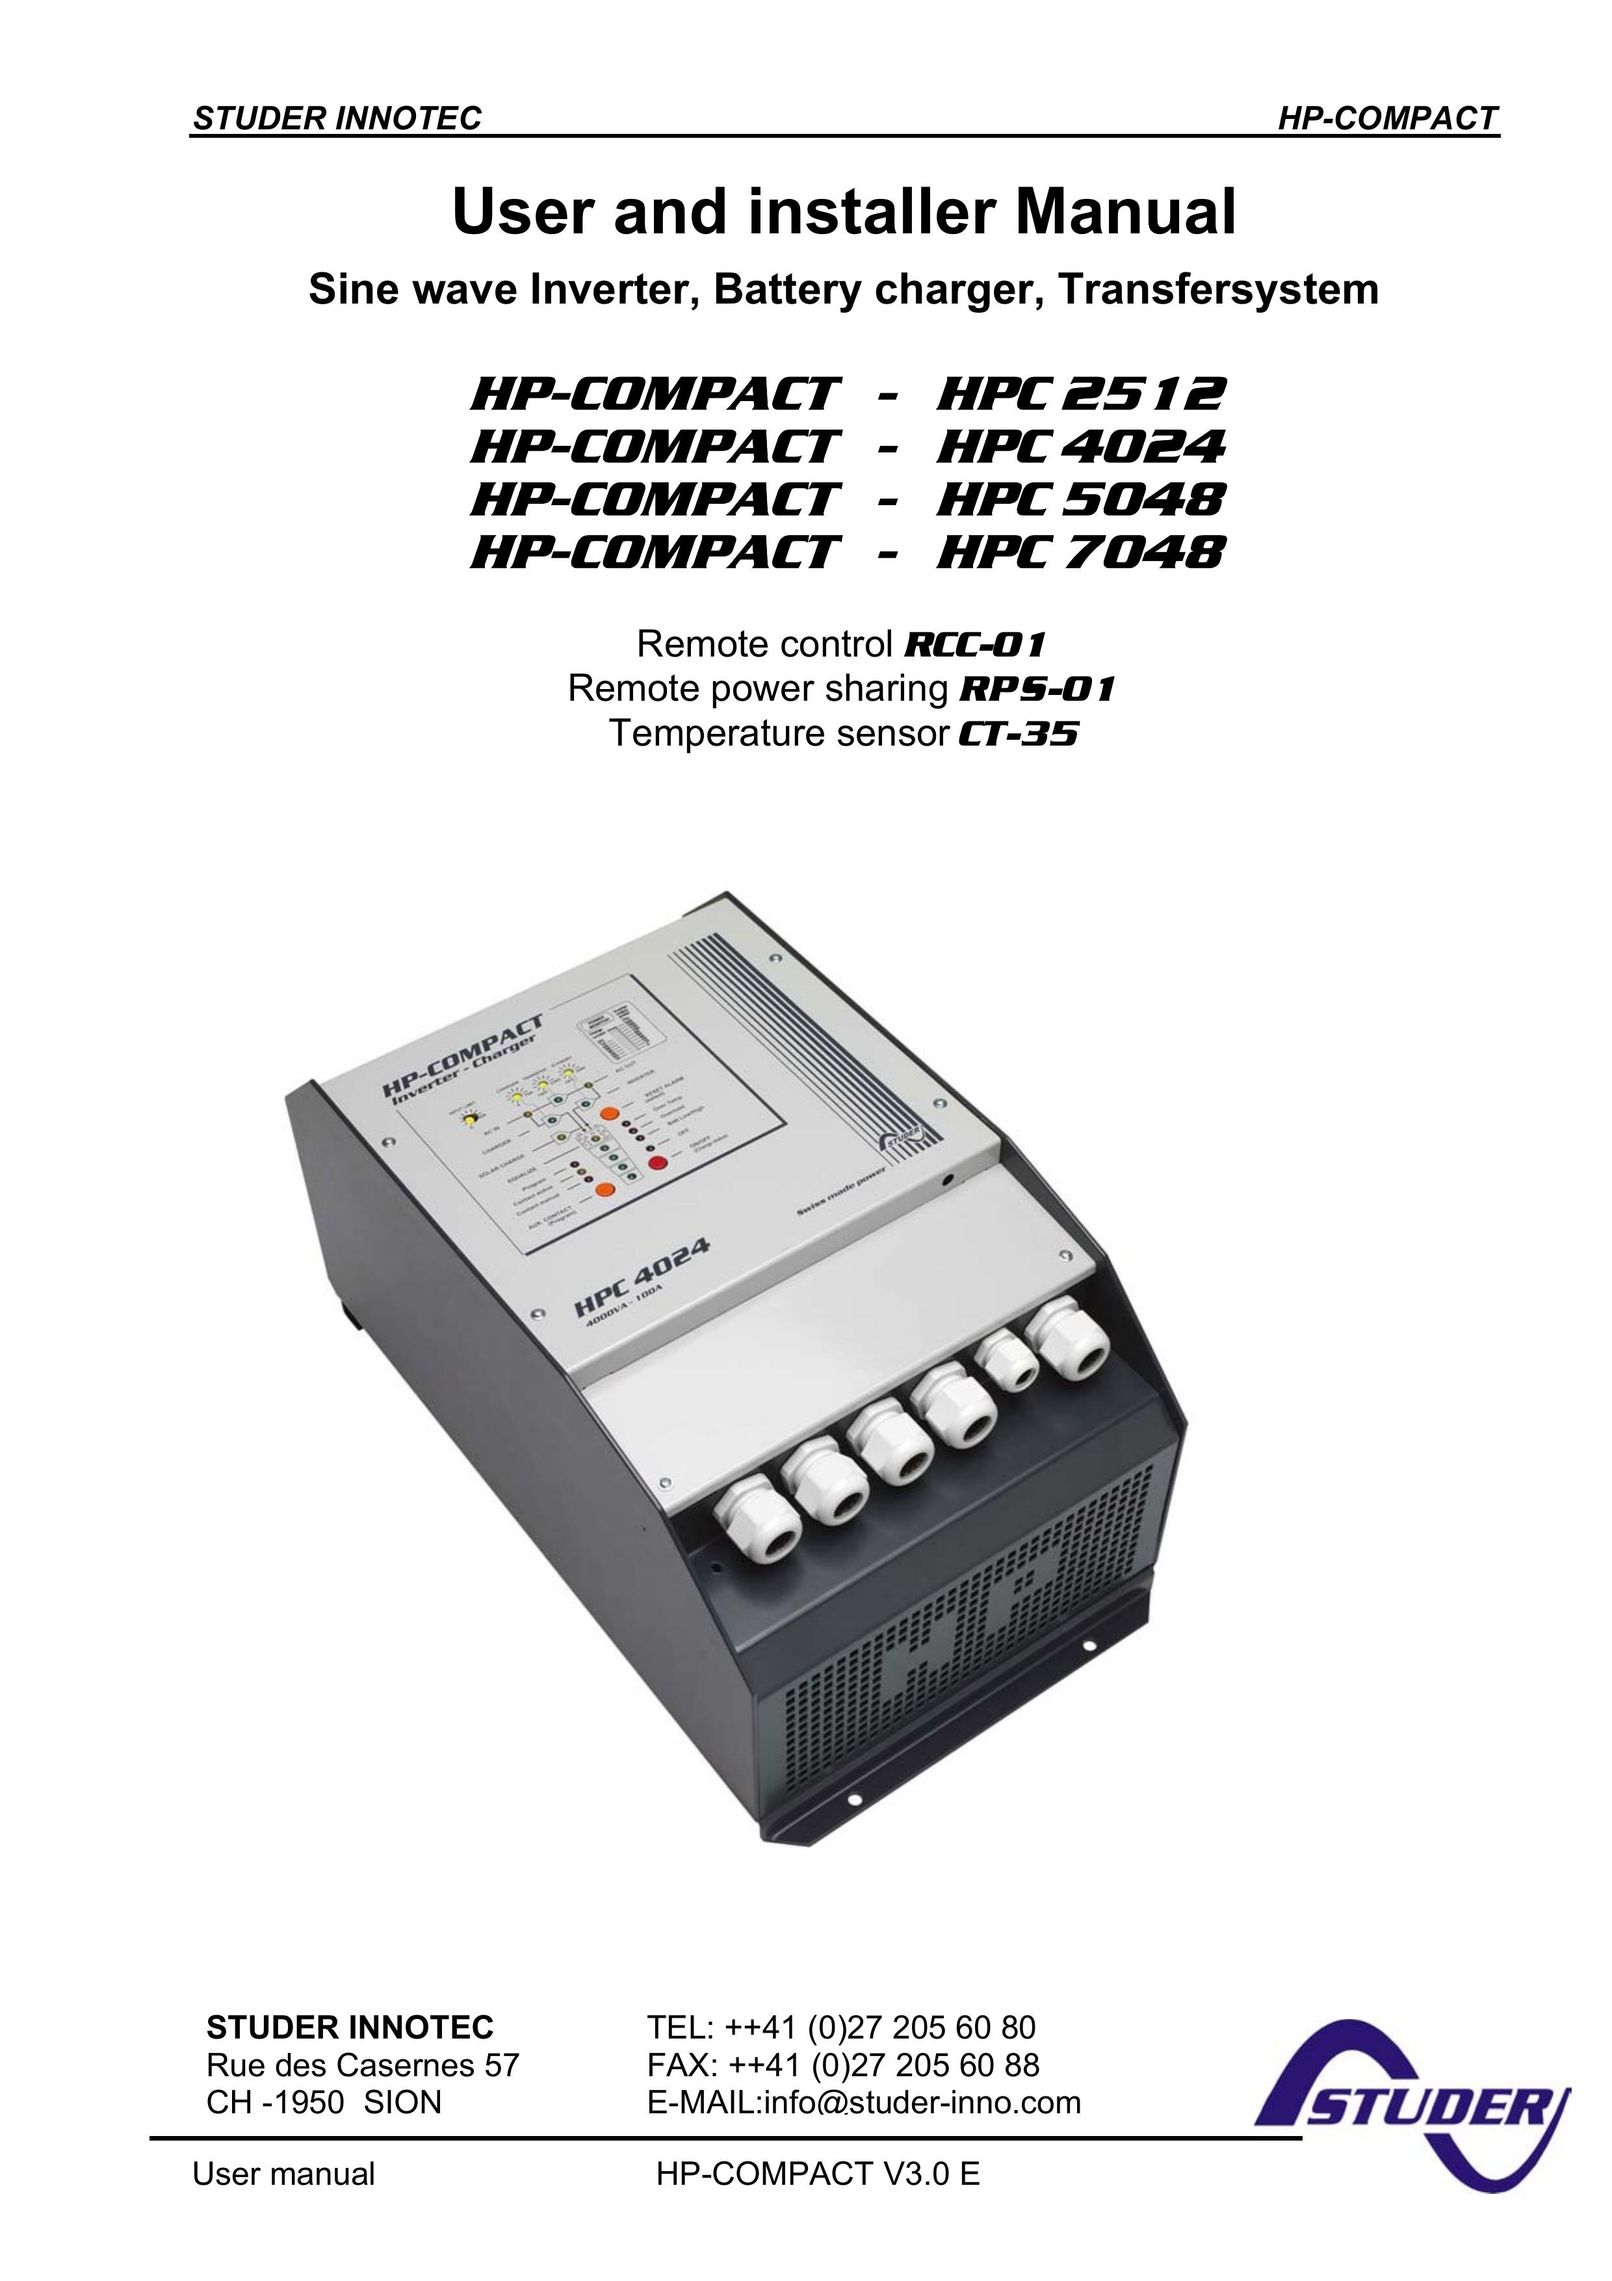 Studer Innotec HPC4024 Battery Charger User Manual